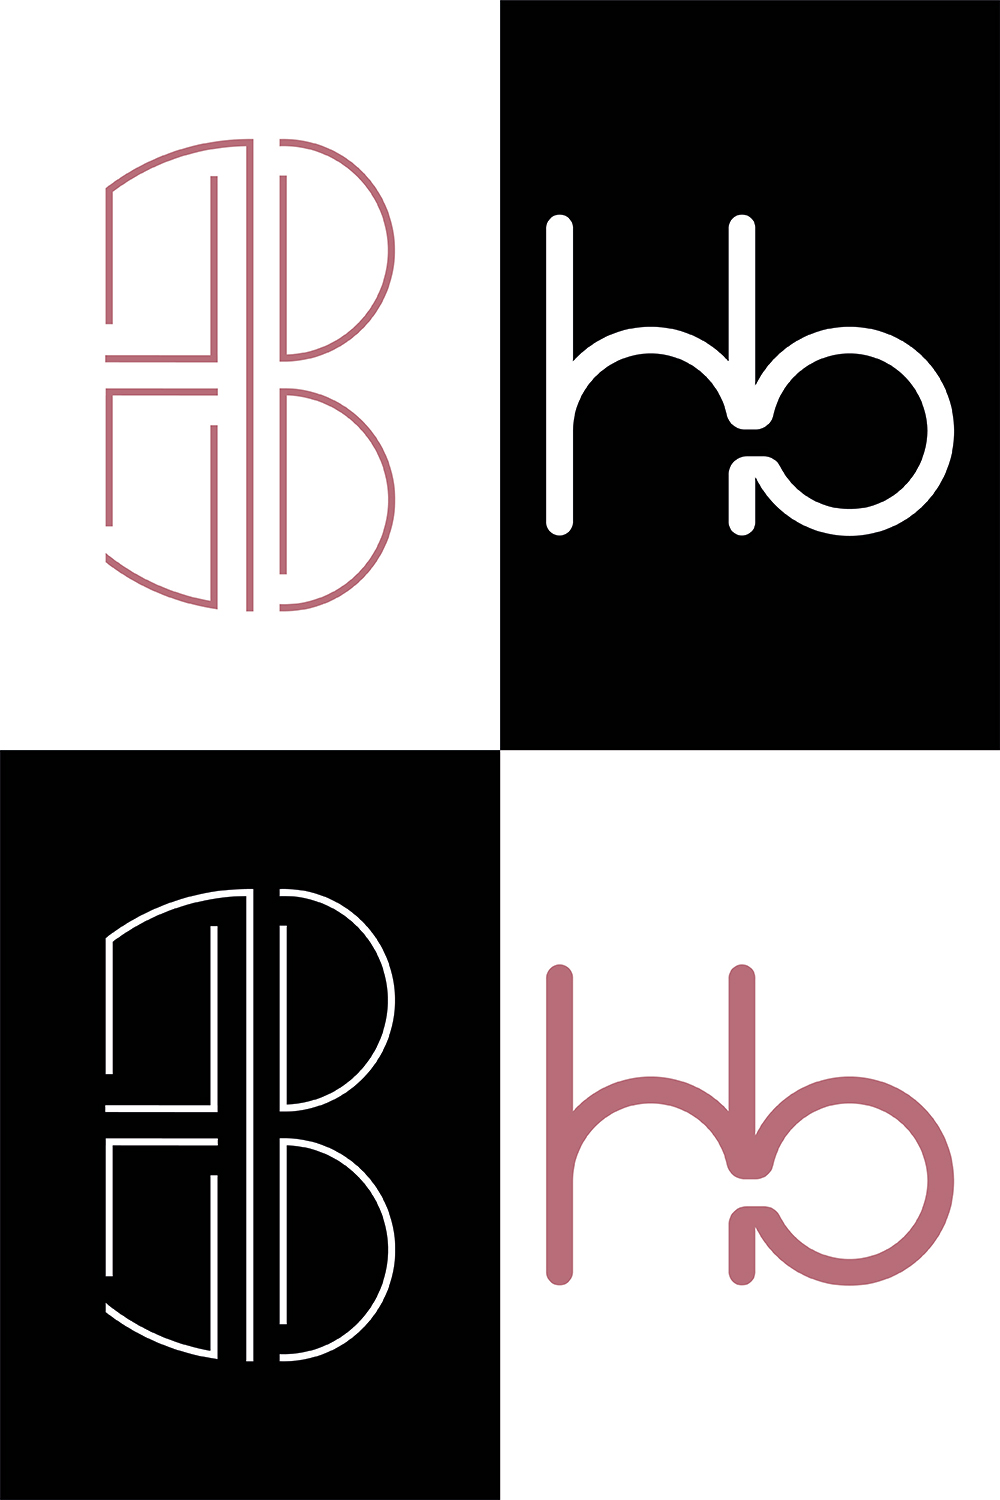 Pair of Letters HB logo pinterest image.